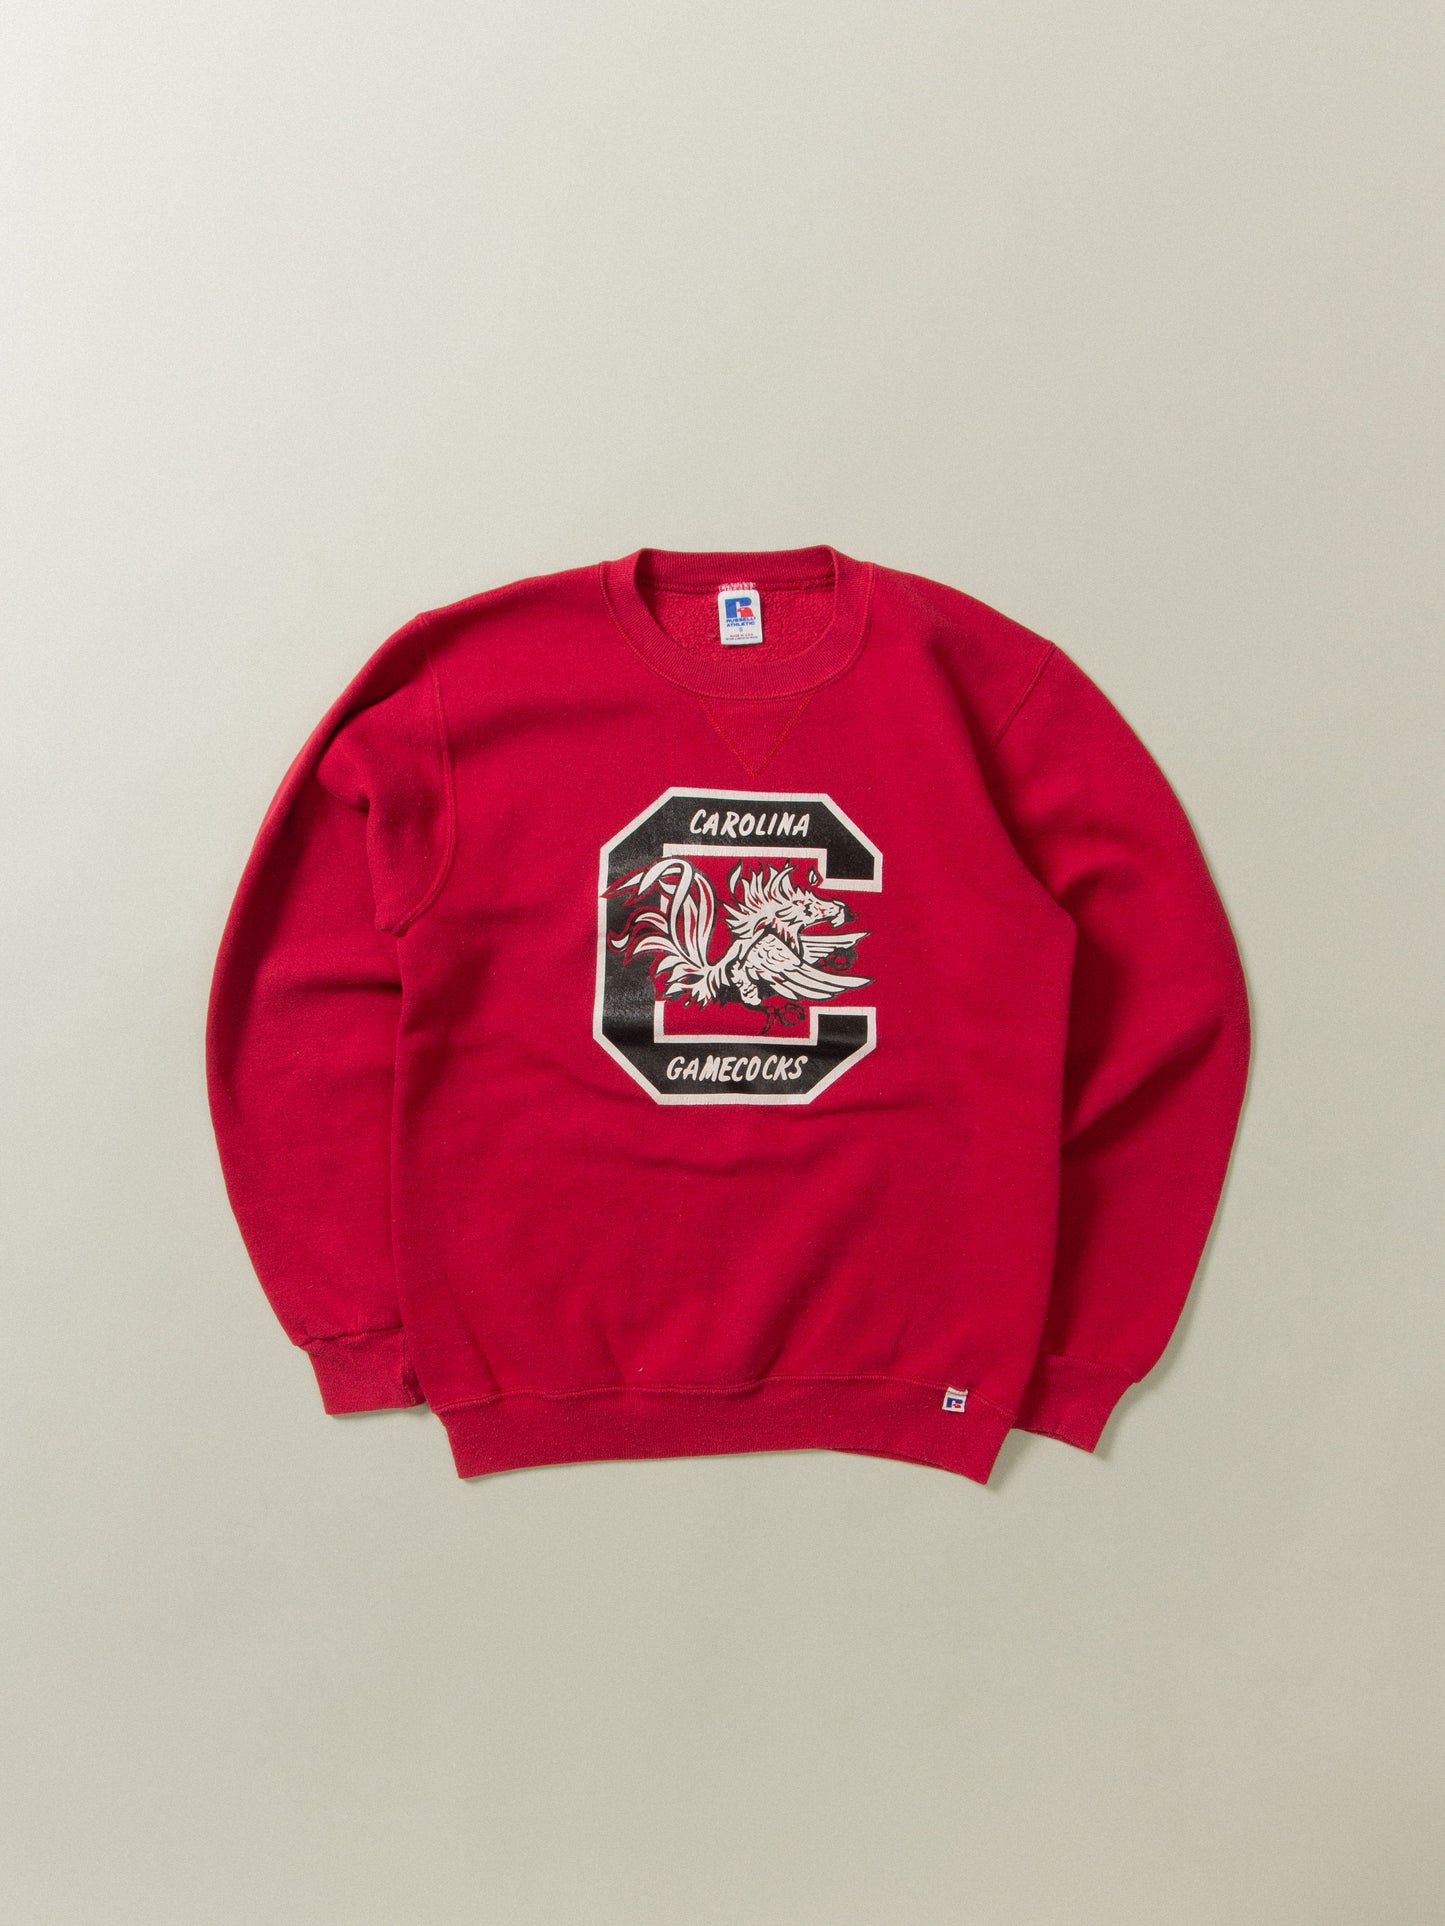 Vtg 2000s Russell Athletic Carolina Gamecocks Sweatshirt - Made in USA (S)